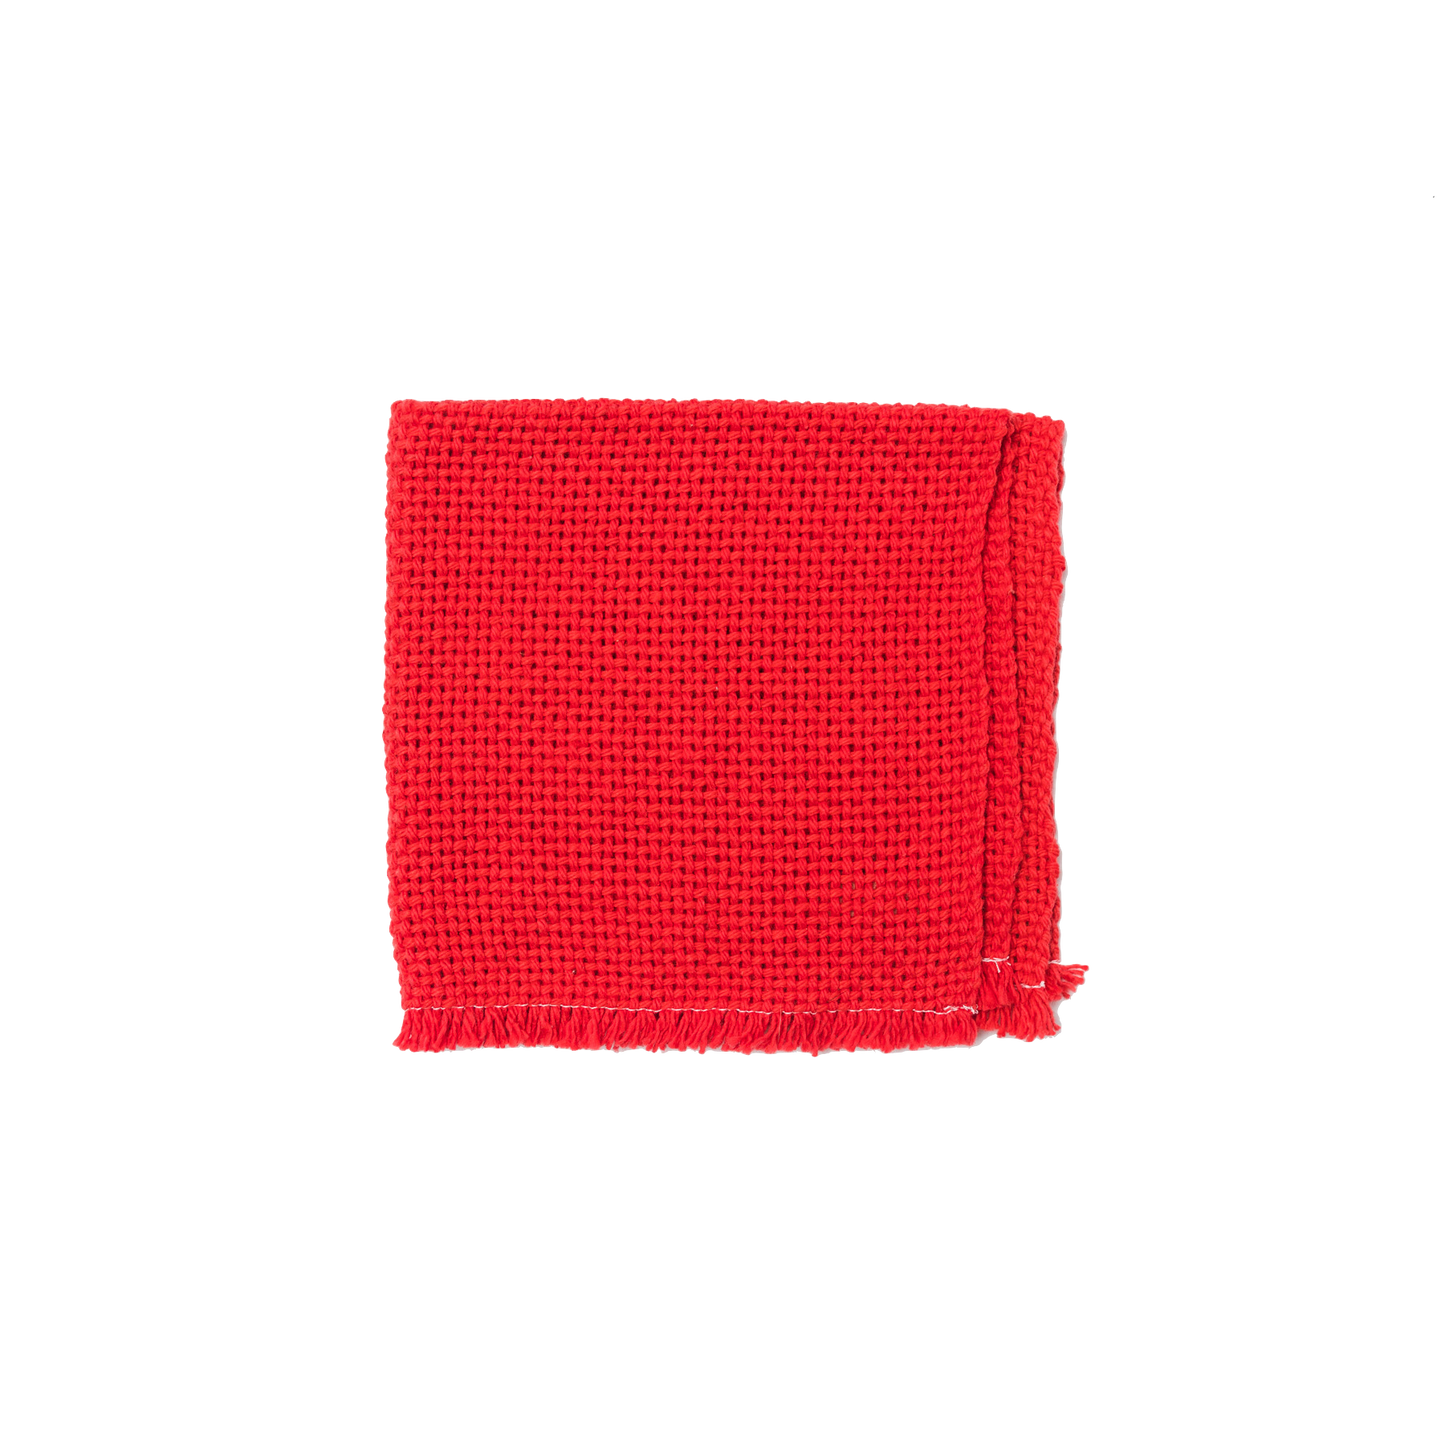 Folded red washcloth